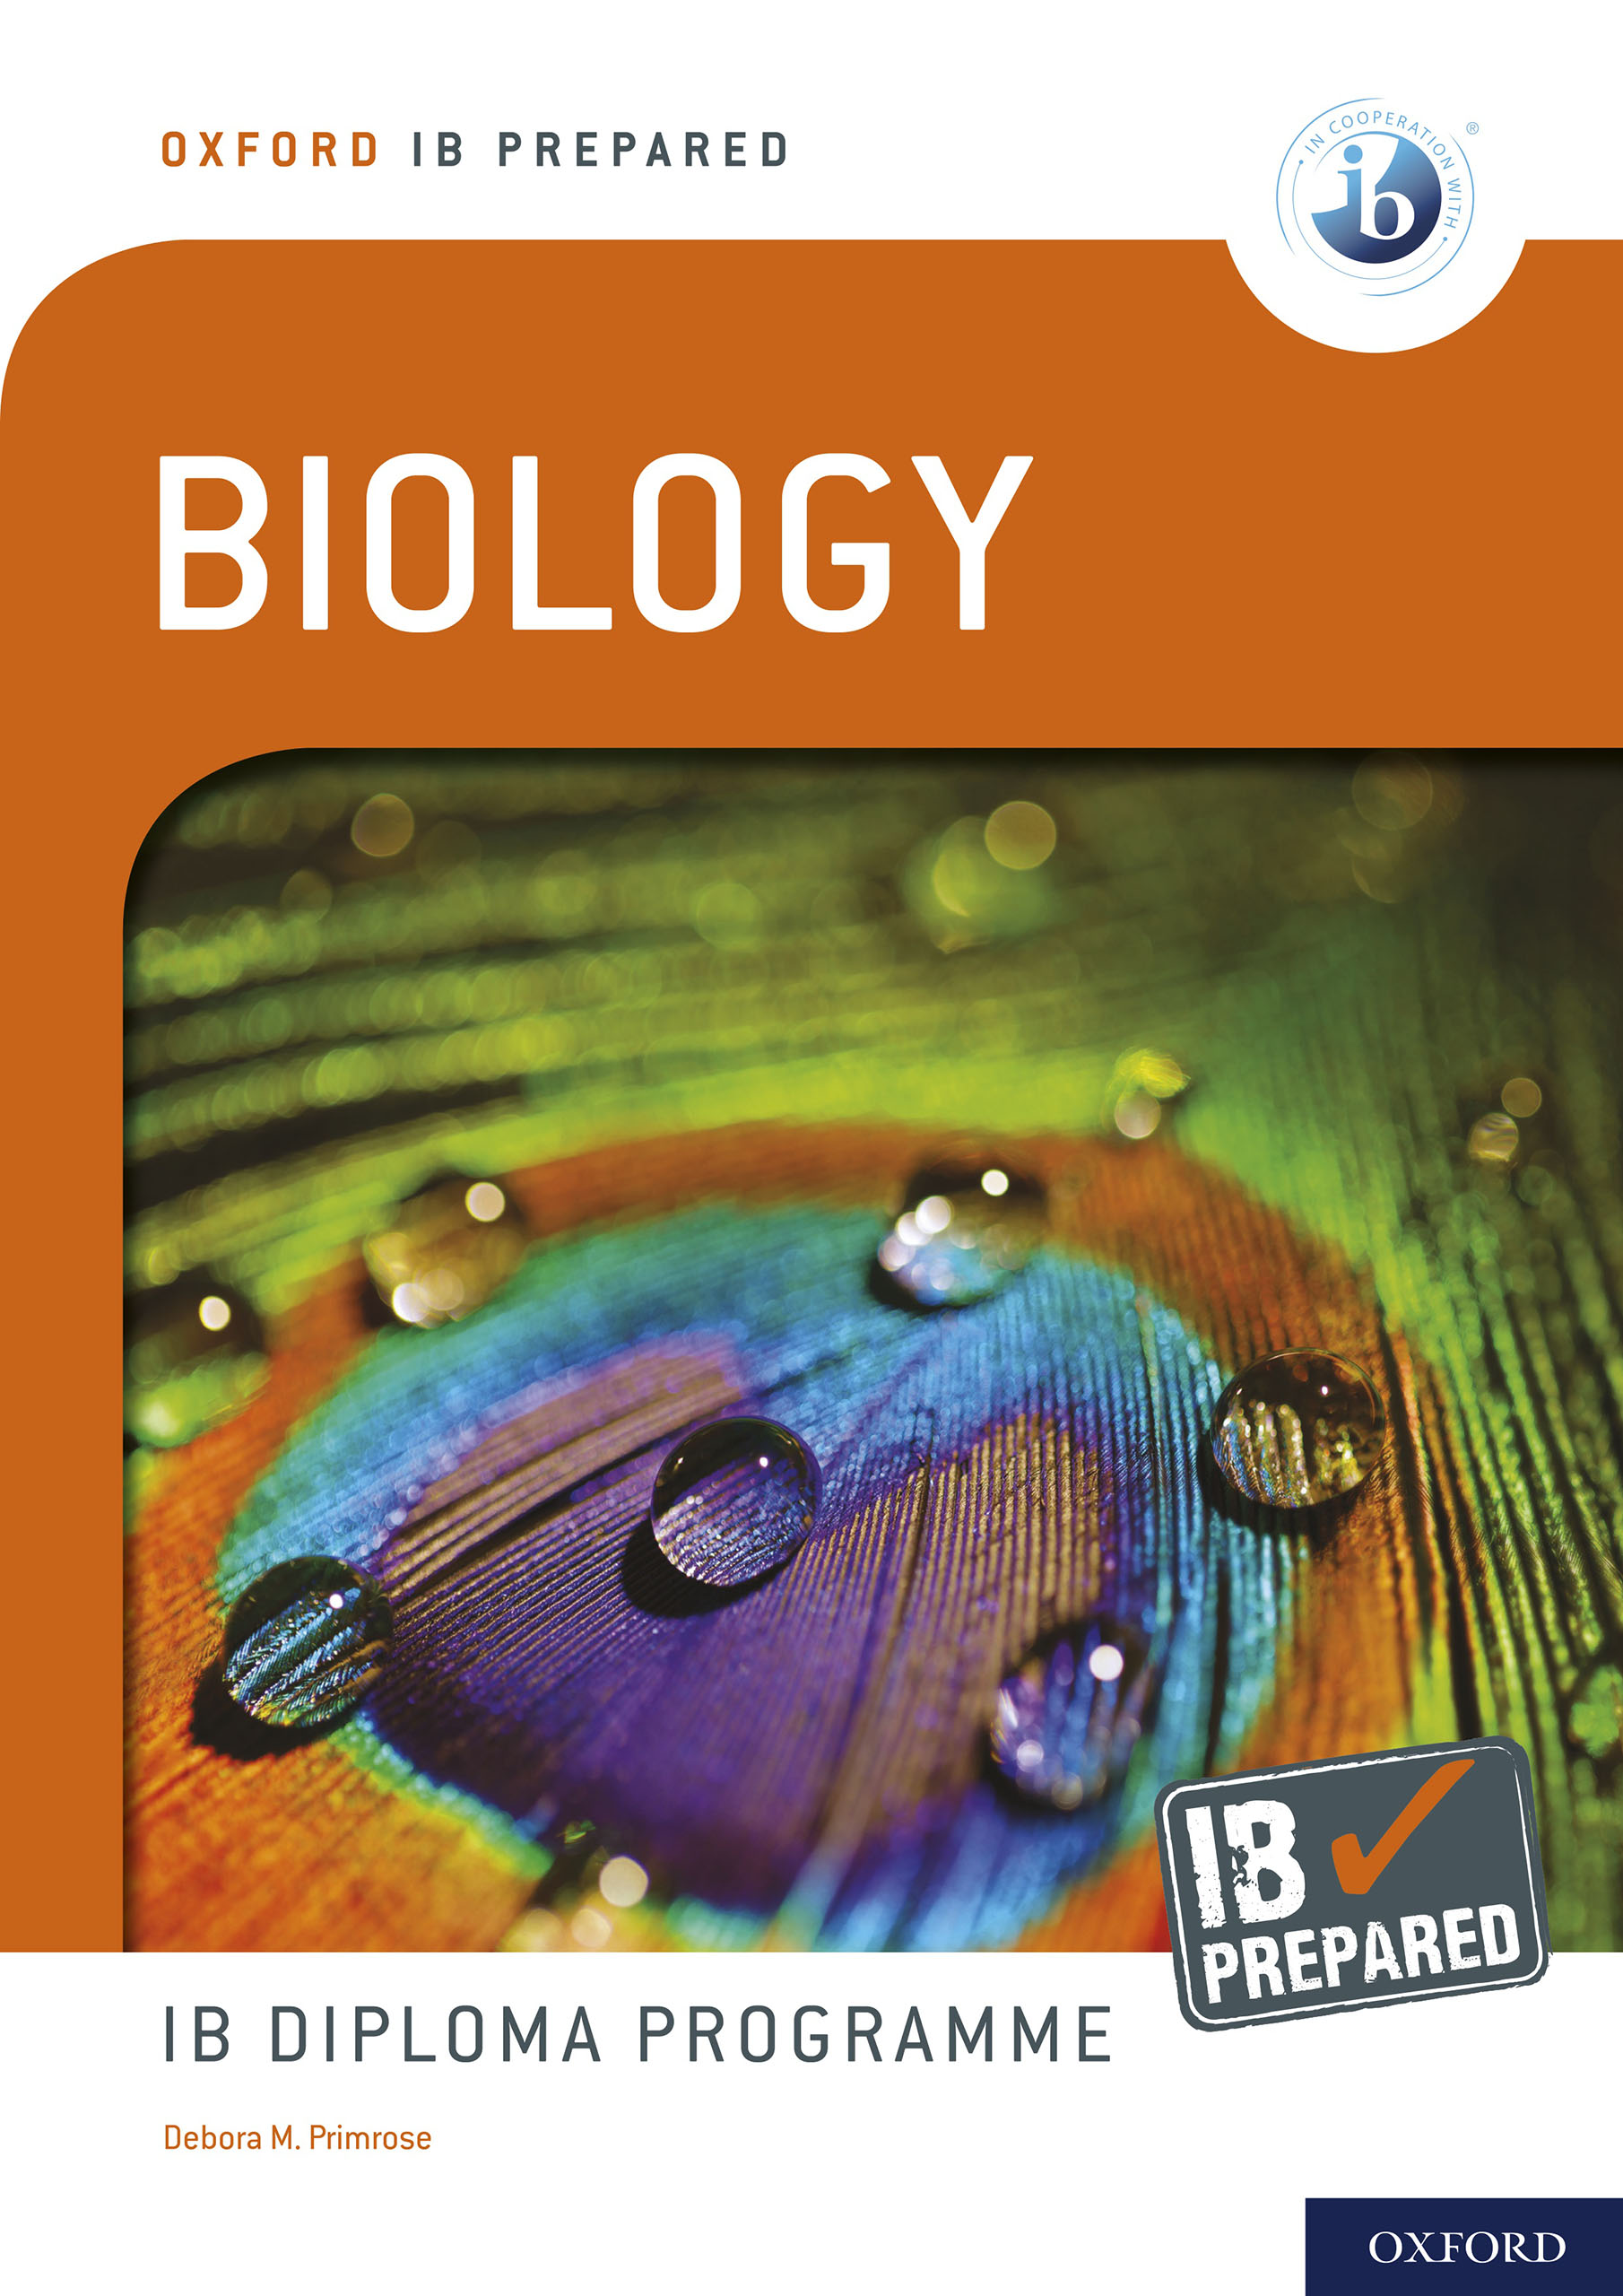 Oxford Ib Prepared Biology Ib Diploma Programme Digital Book Blinklearning 4726